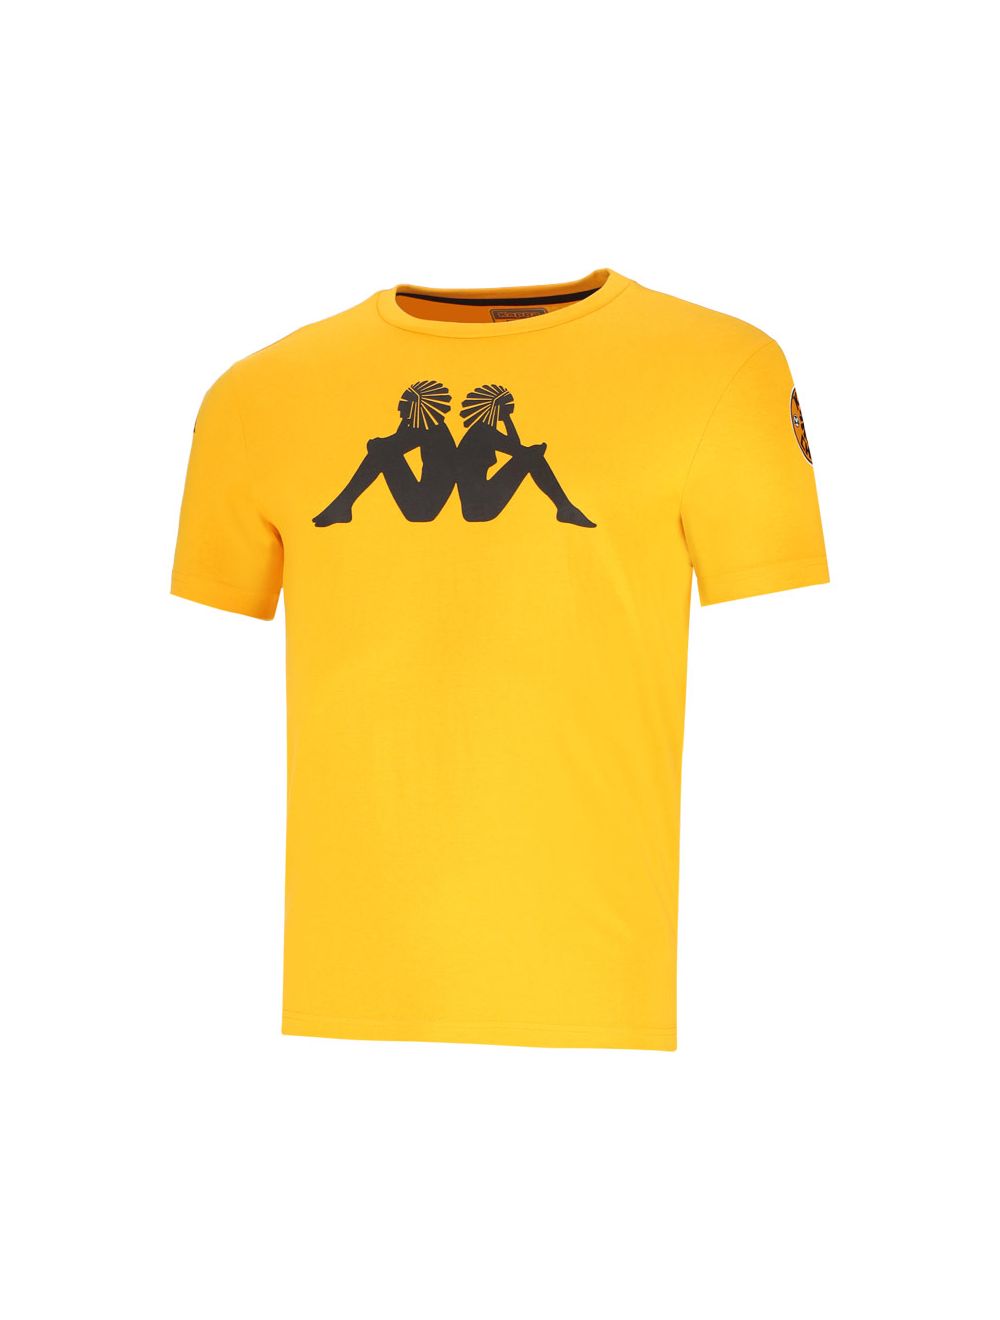 Shop Kappa Kaizer Chiefs Mens Ametot Yellow | Studio 88